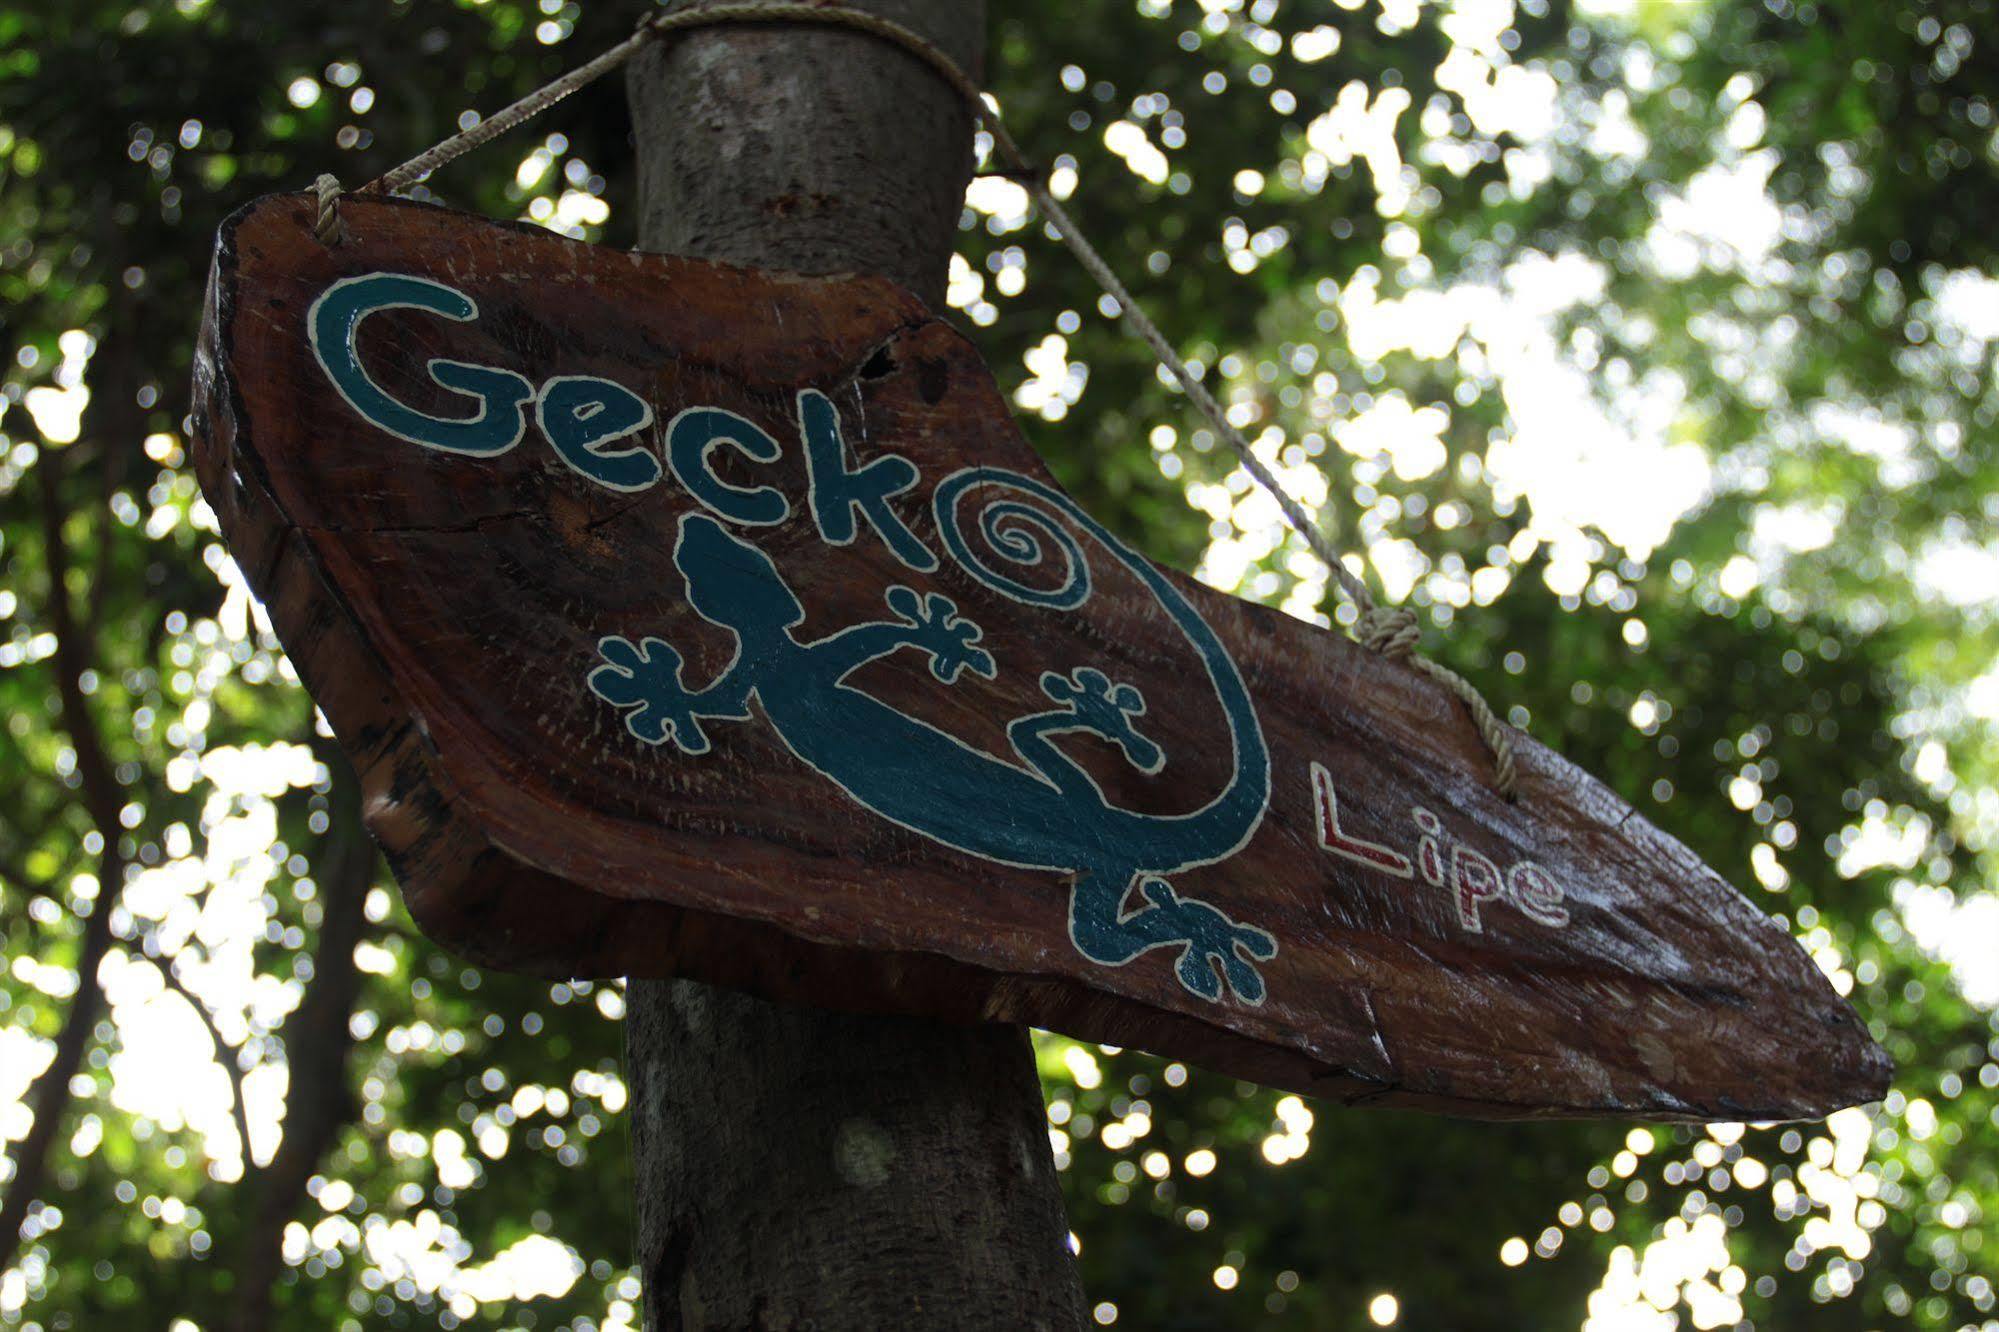 Gecko Lipe Resort Exterior foto